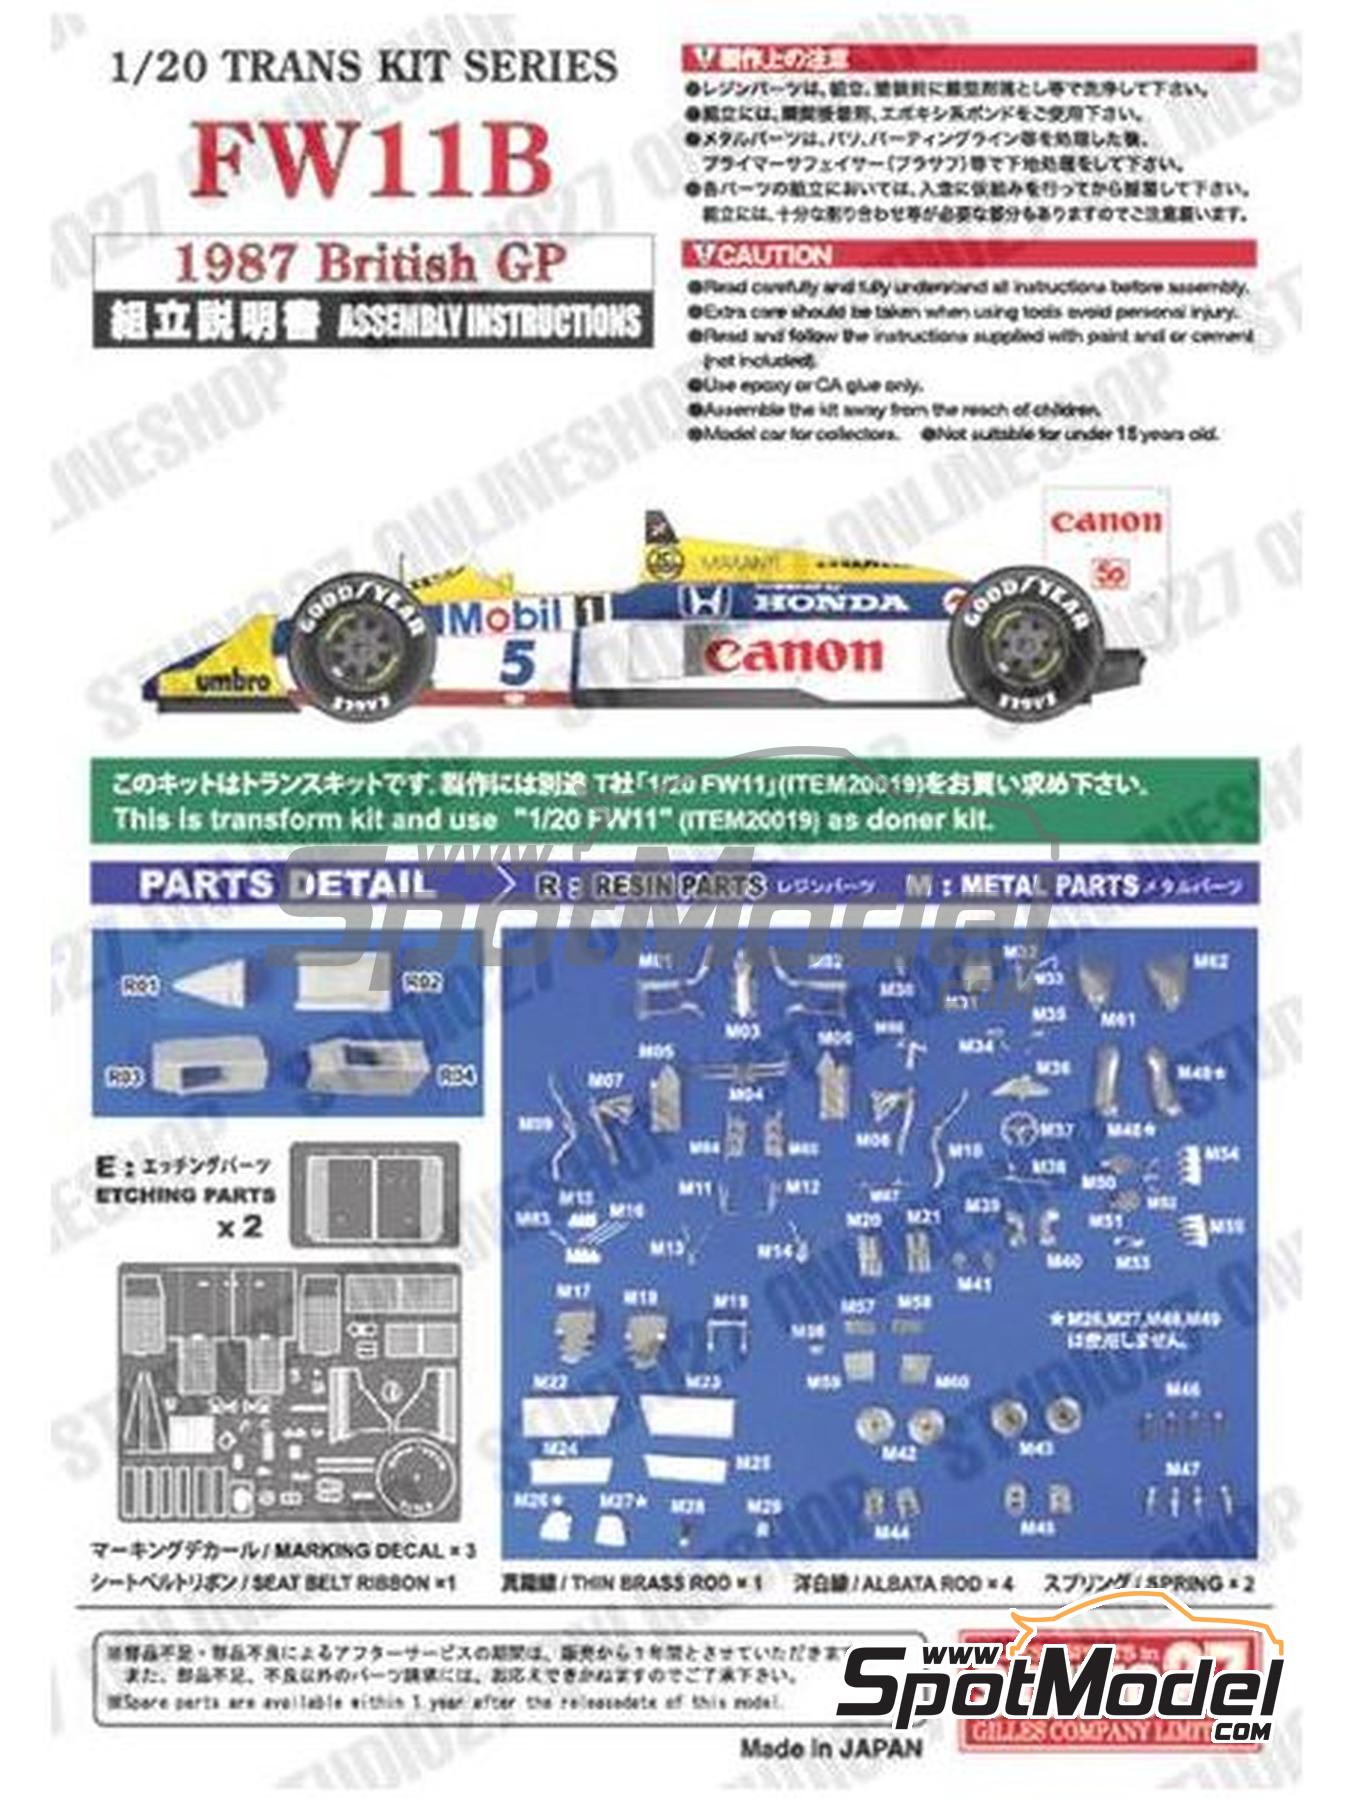 Williams Honda FW11B Williams Grand Prix Engineering Team sponsored by  Canon - British Formula 1 Grand Prix 1987. Transkit in 1/20 scale  manufactured